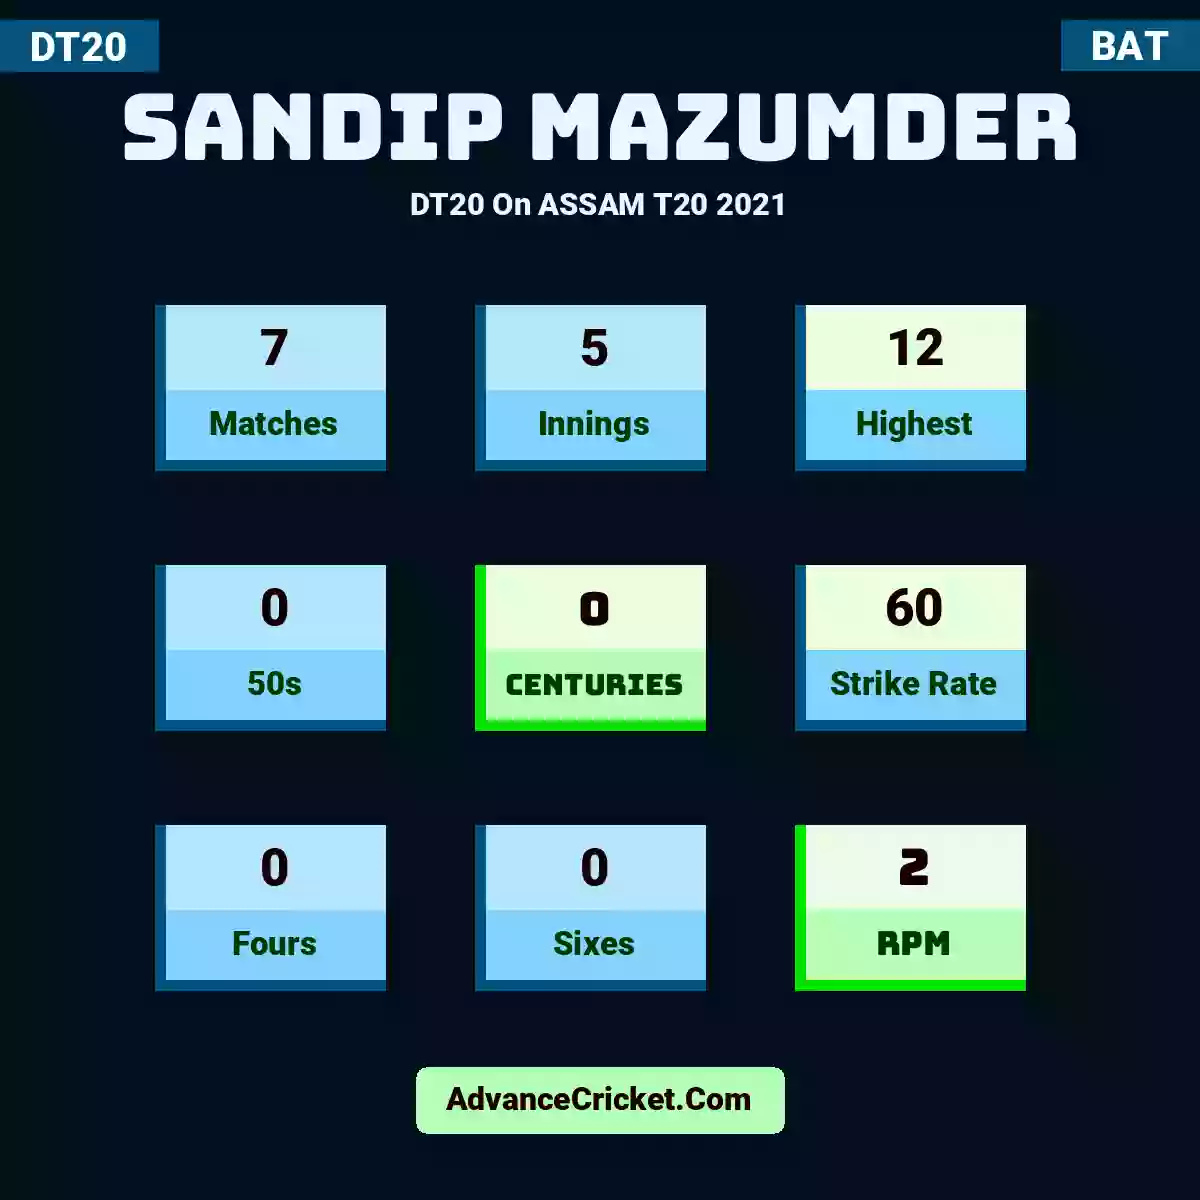 Sandip Mazumder DT20  On ASSAM T20 2021, Sandip Mazumder played 7 matches, scored 12 runs as highest, 0 half-centuries, and 0 centuries, with a strike rate of 60. S.Mazumdar hit 0 fours and 0 sixes, with an RPM of 2.